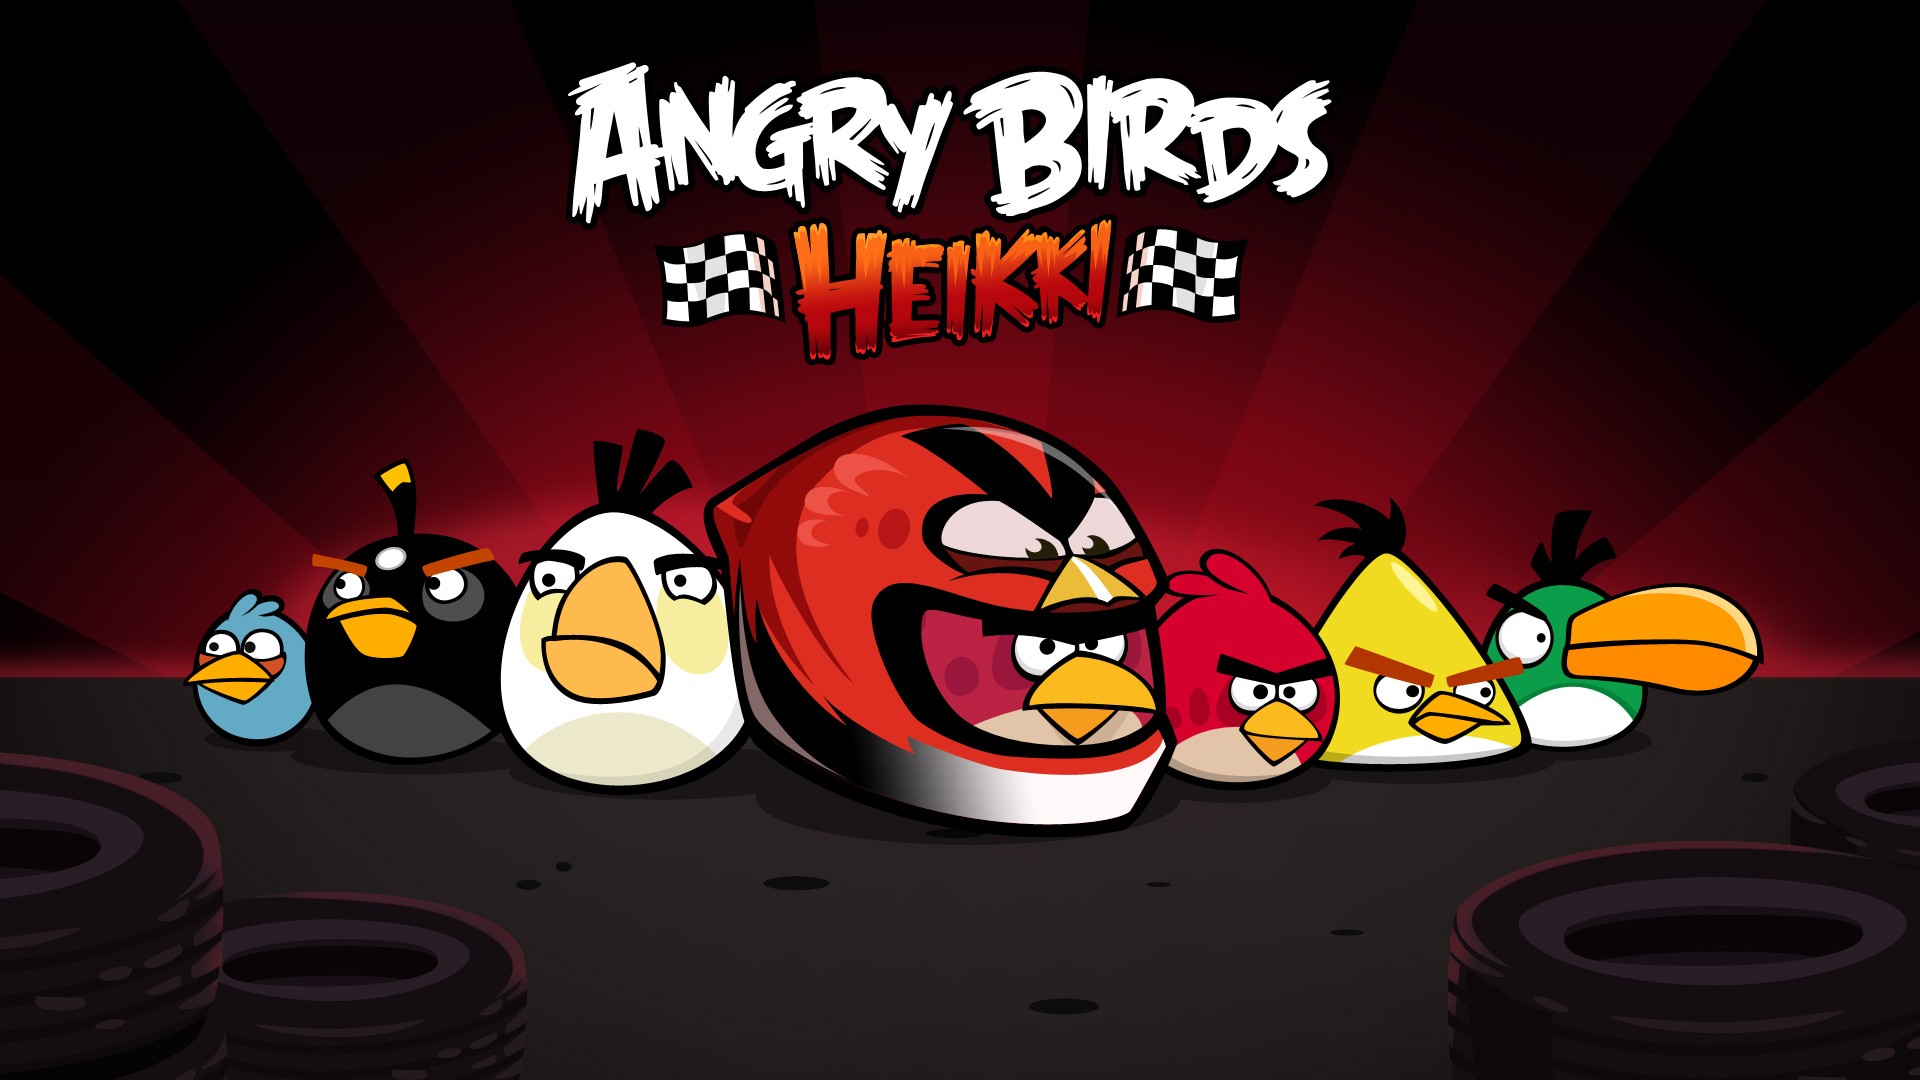 Angry Birds heikki háttérkép